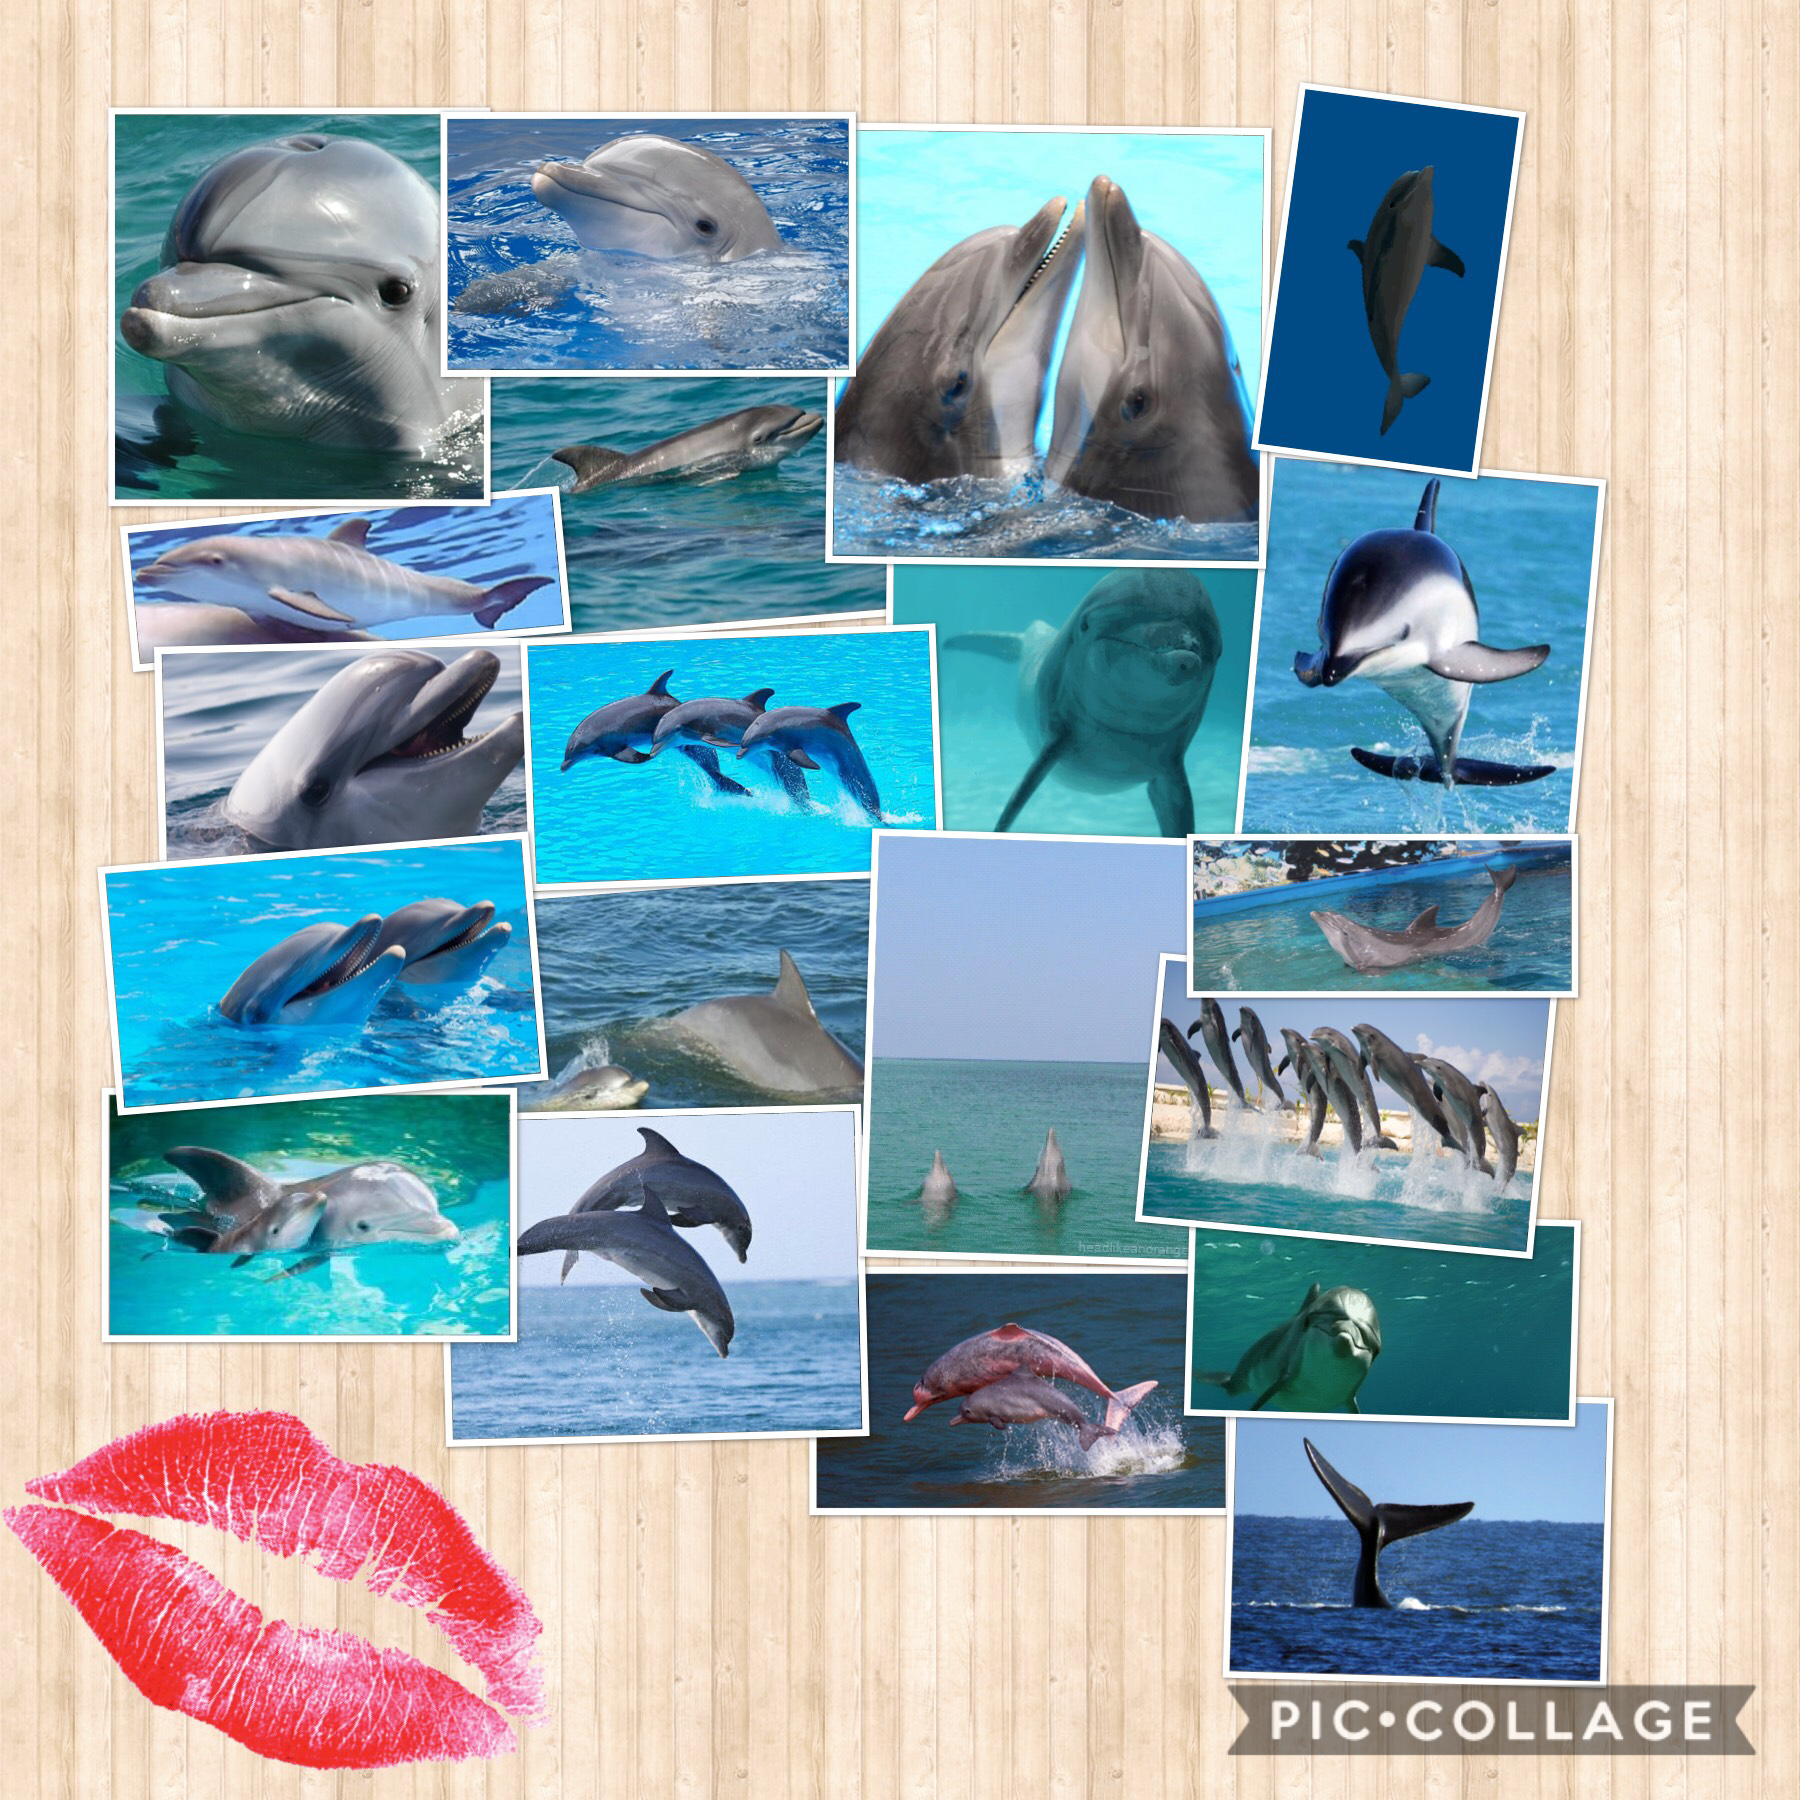 I love dolphins